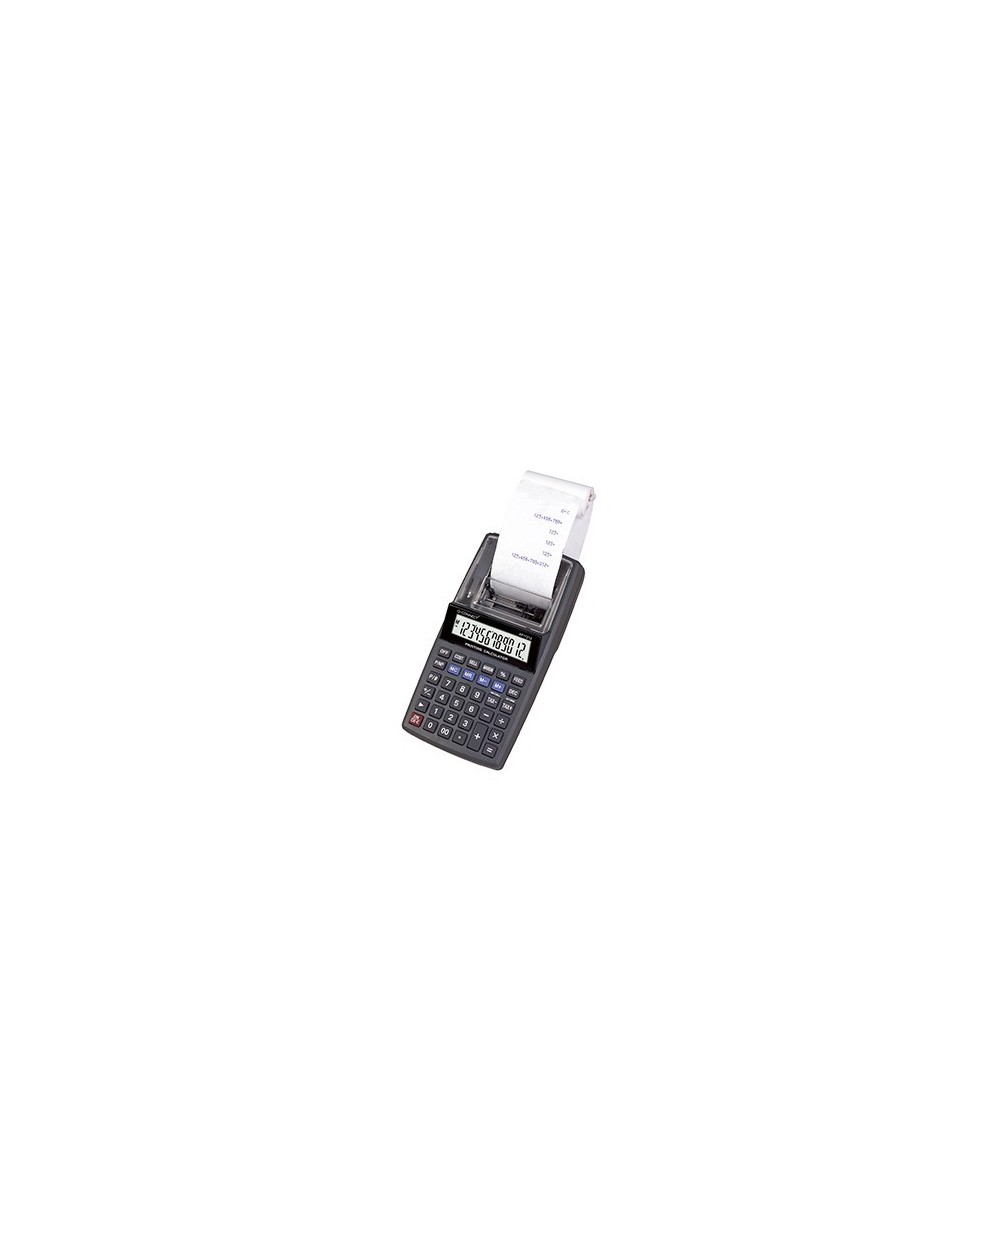 Calculadora q connect impresora pantalla papel kf11213 12 digitos negra